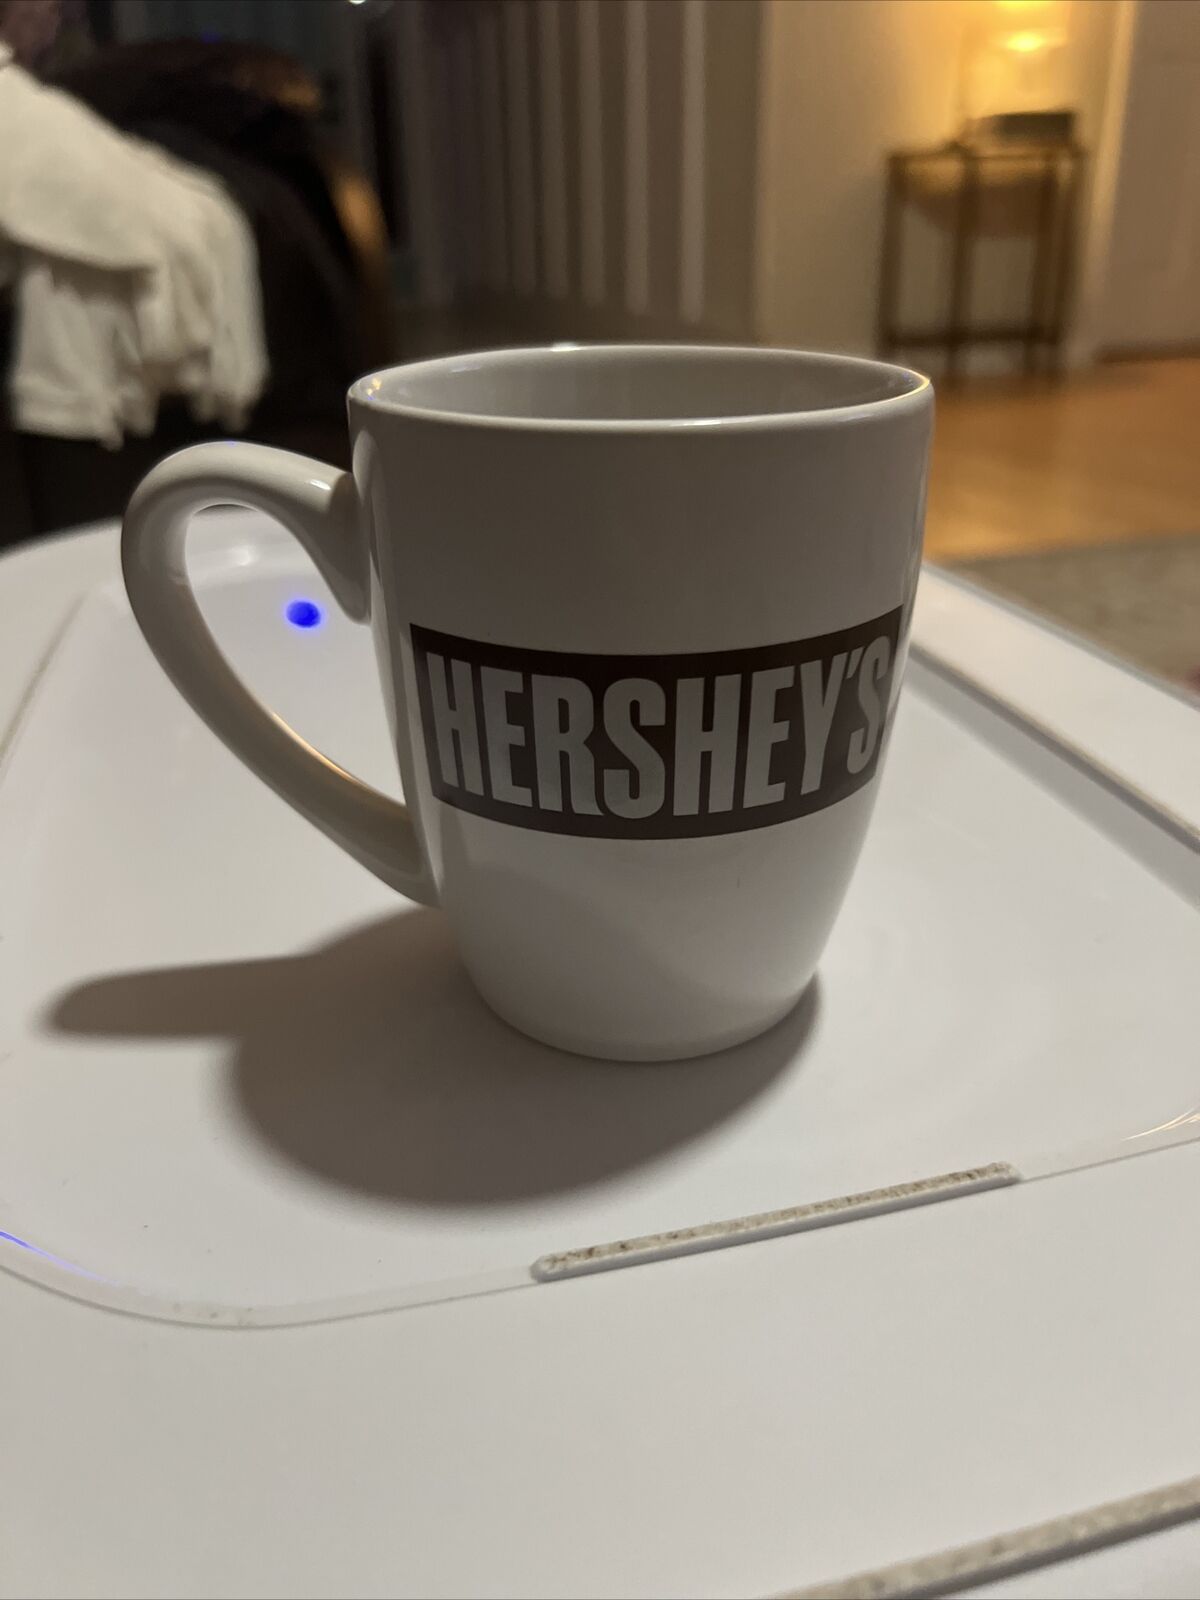 Hershey’s “Chocolate Makes Everything Better” Advertising Mug